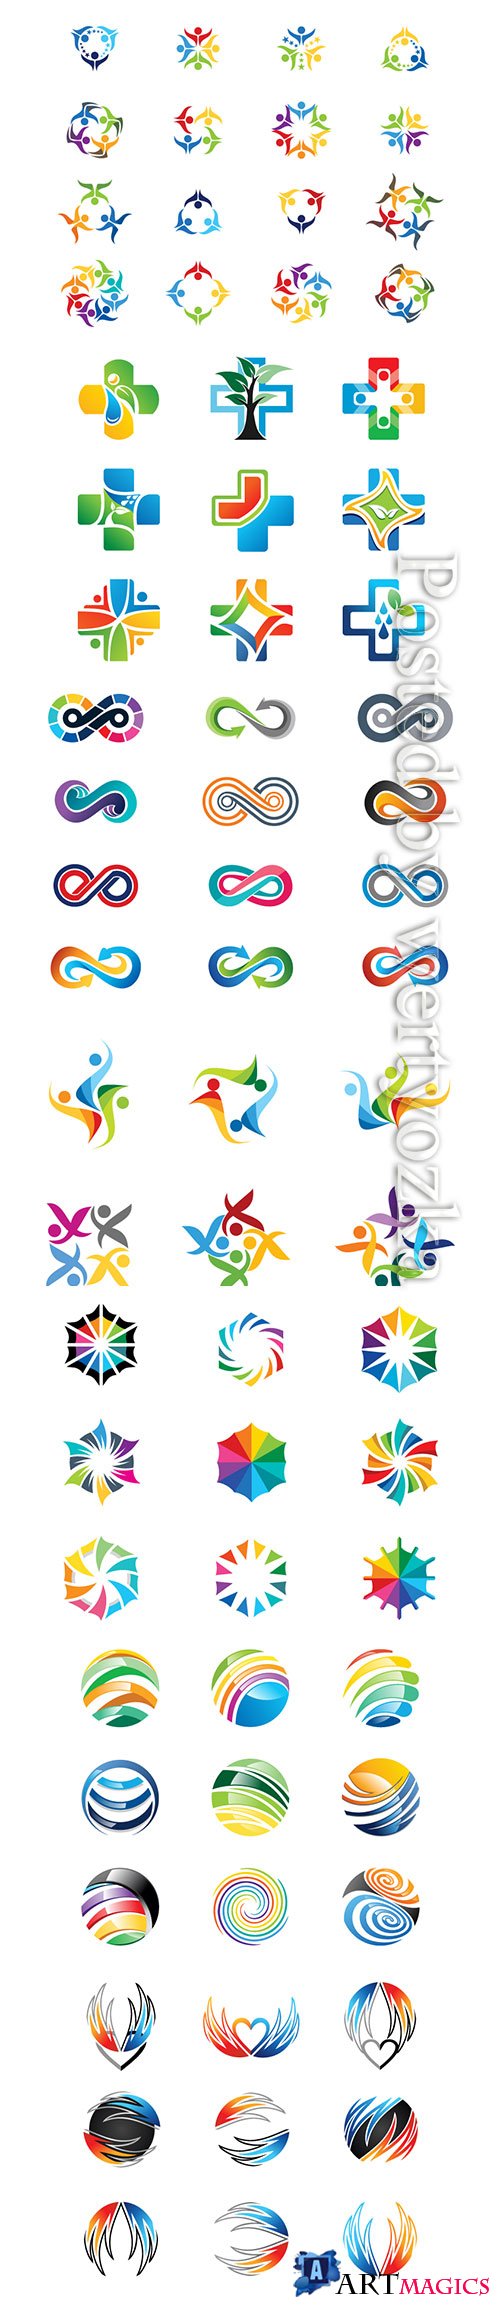 Designer logos in vector